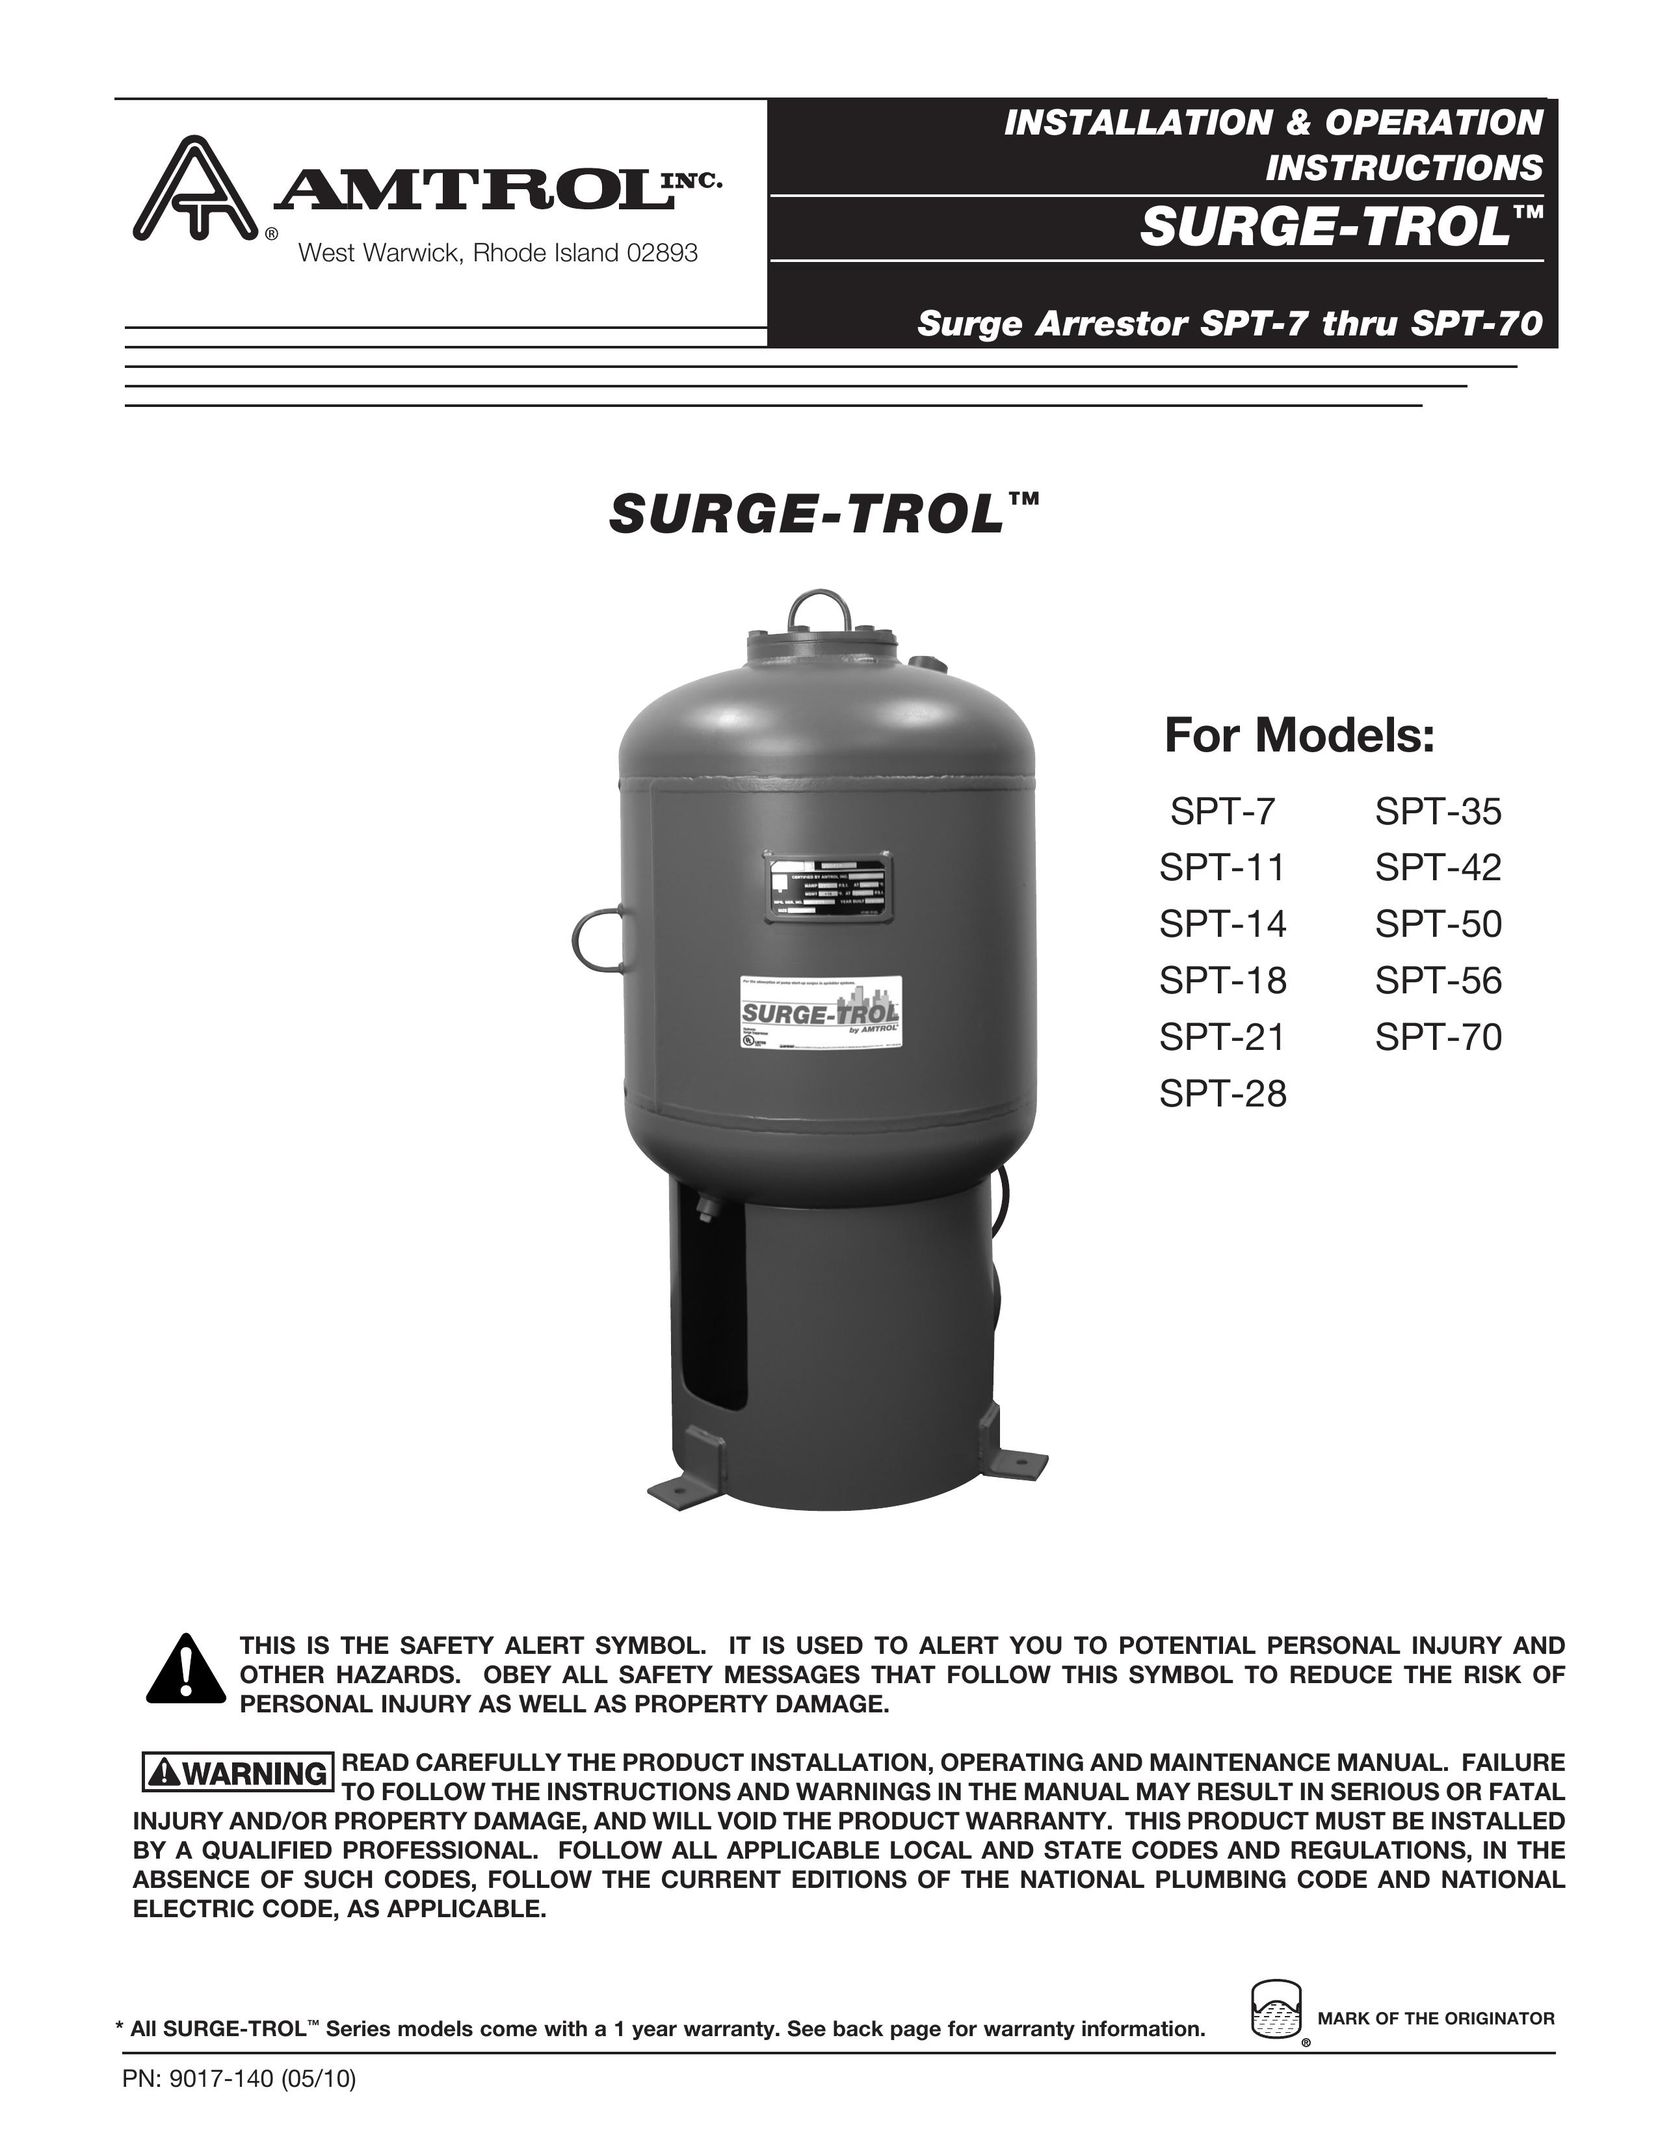 Amtrol SPT-28 Surge Protector User Manual